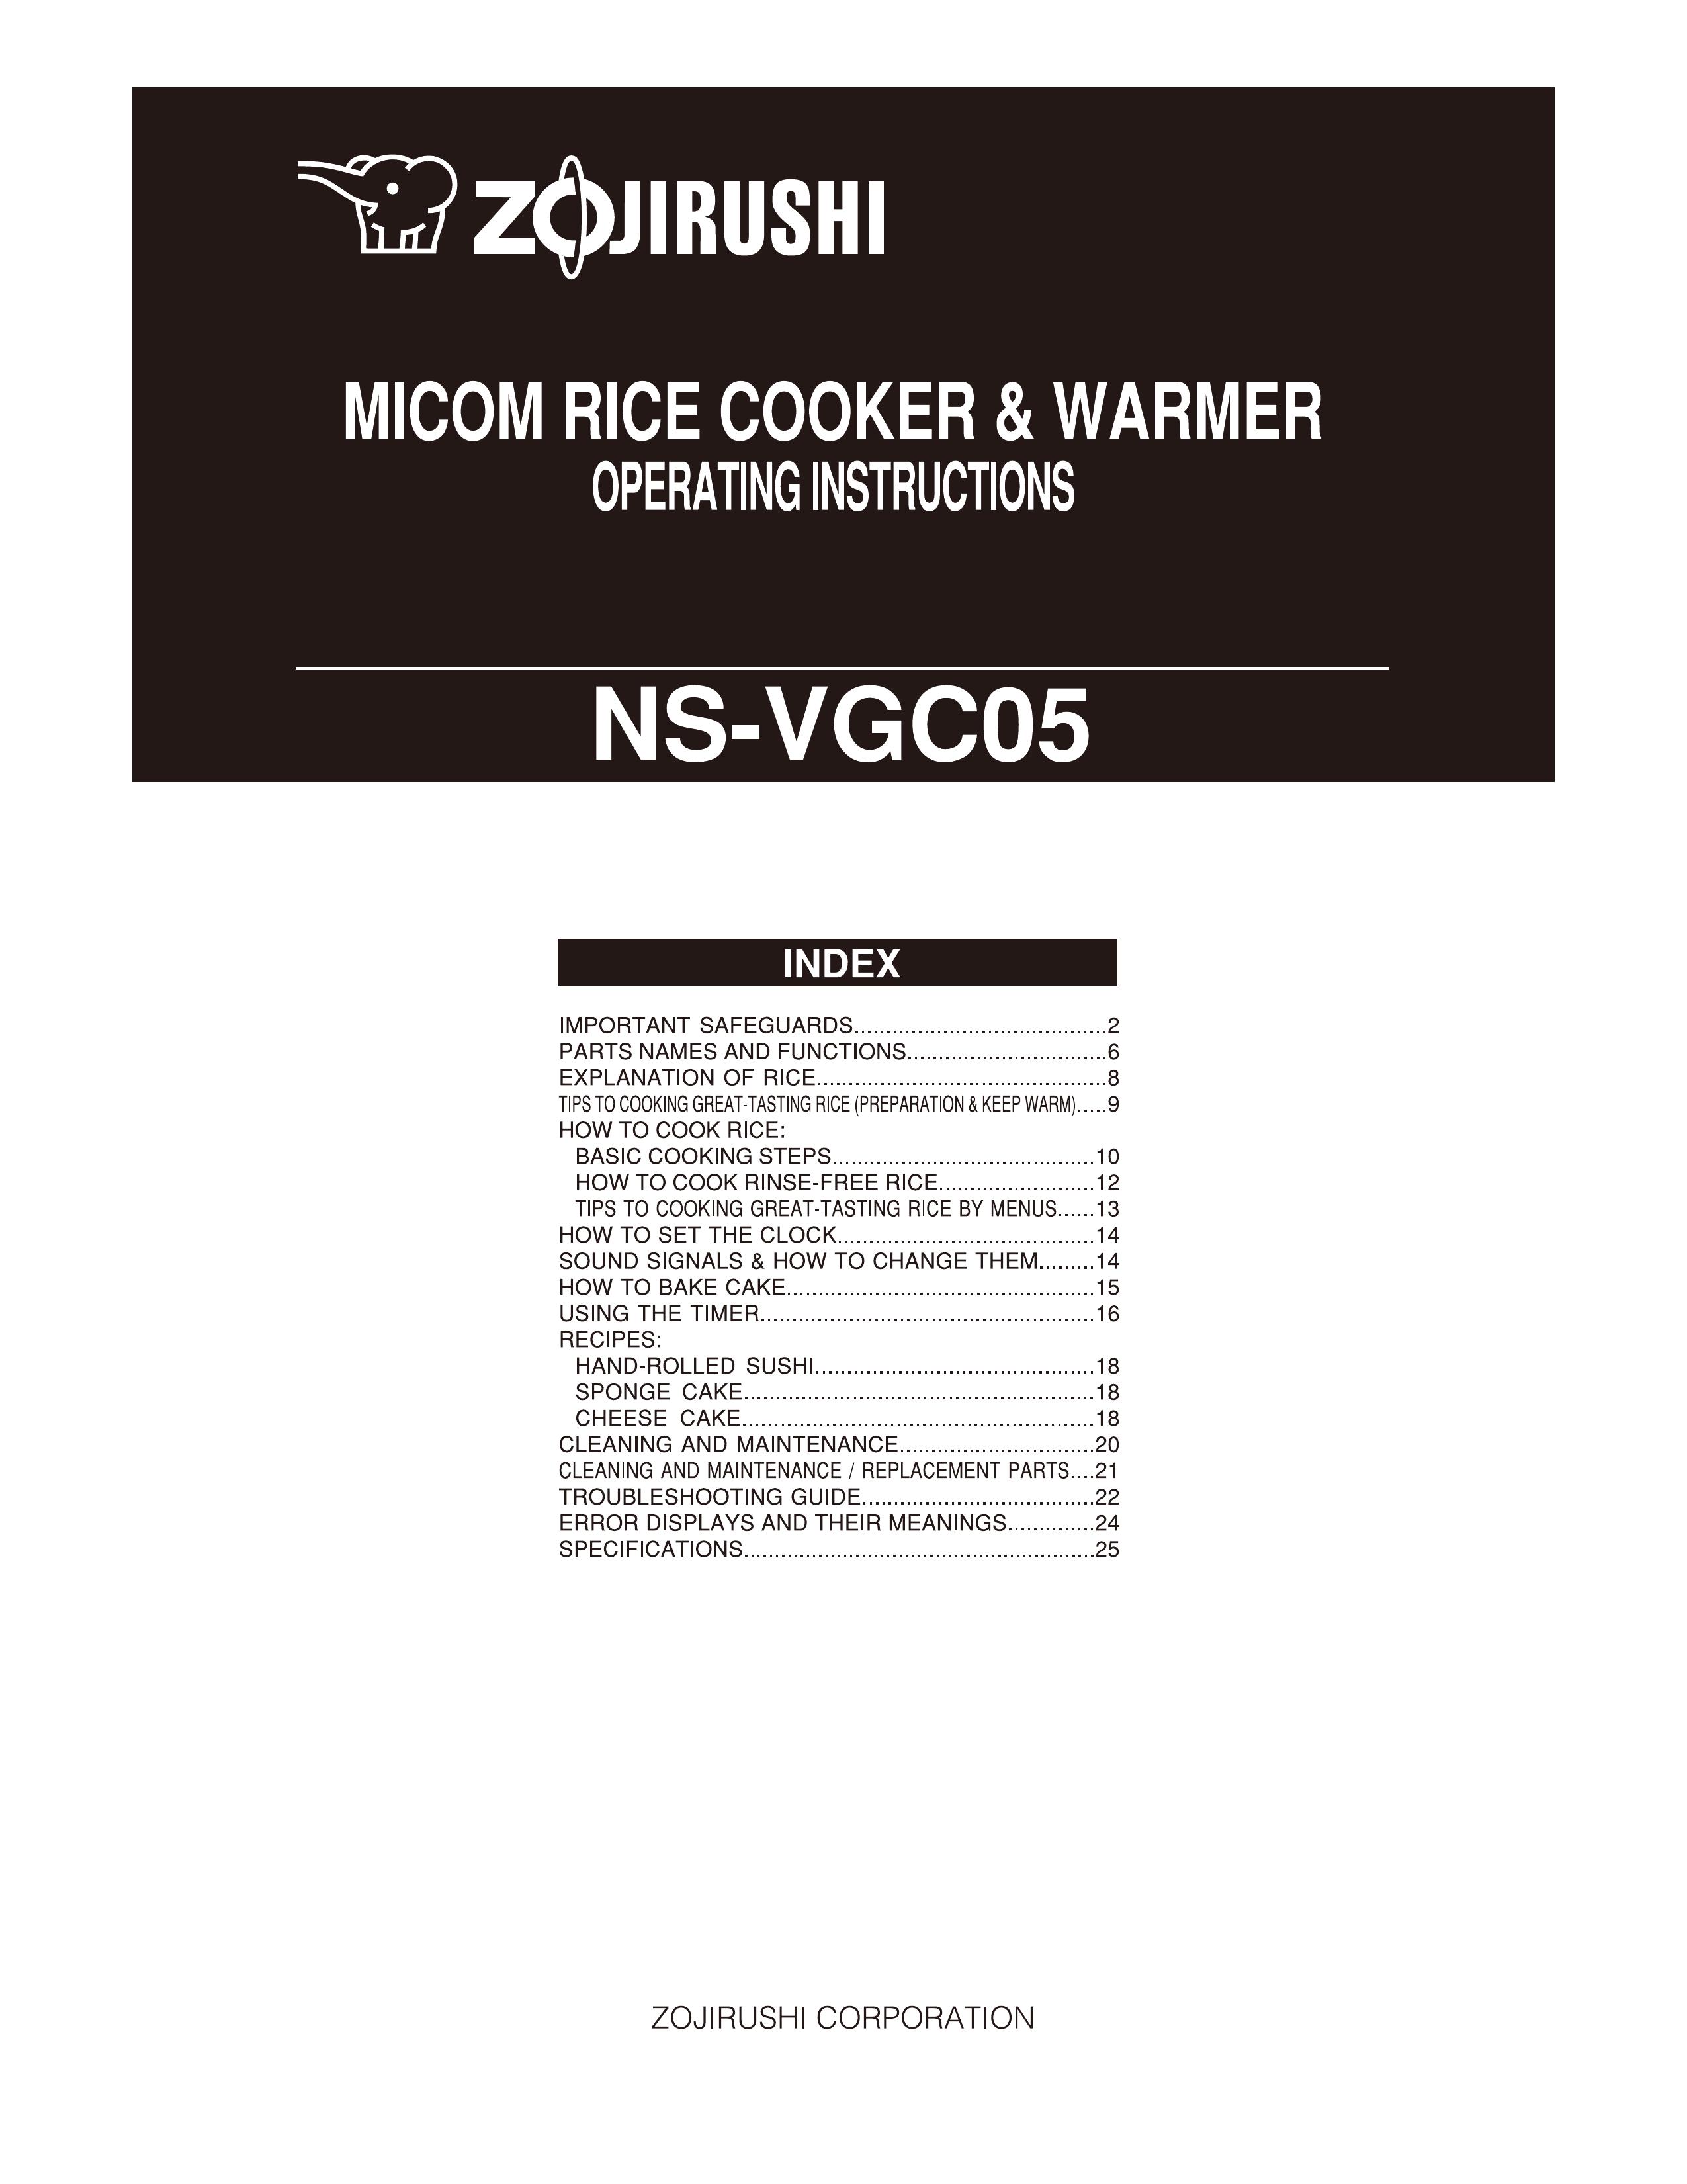 Zojirushi NS-VGC05 Rice Cooker User Manual